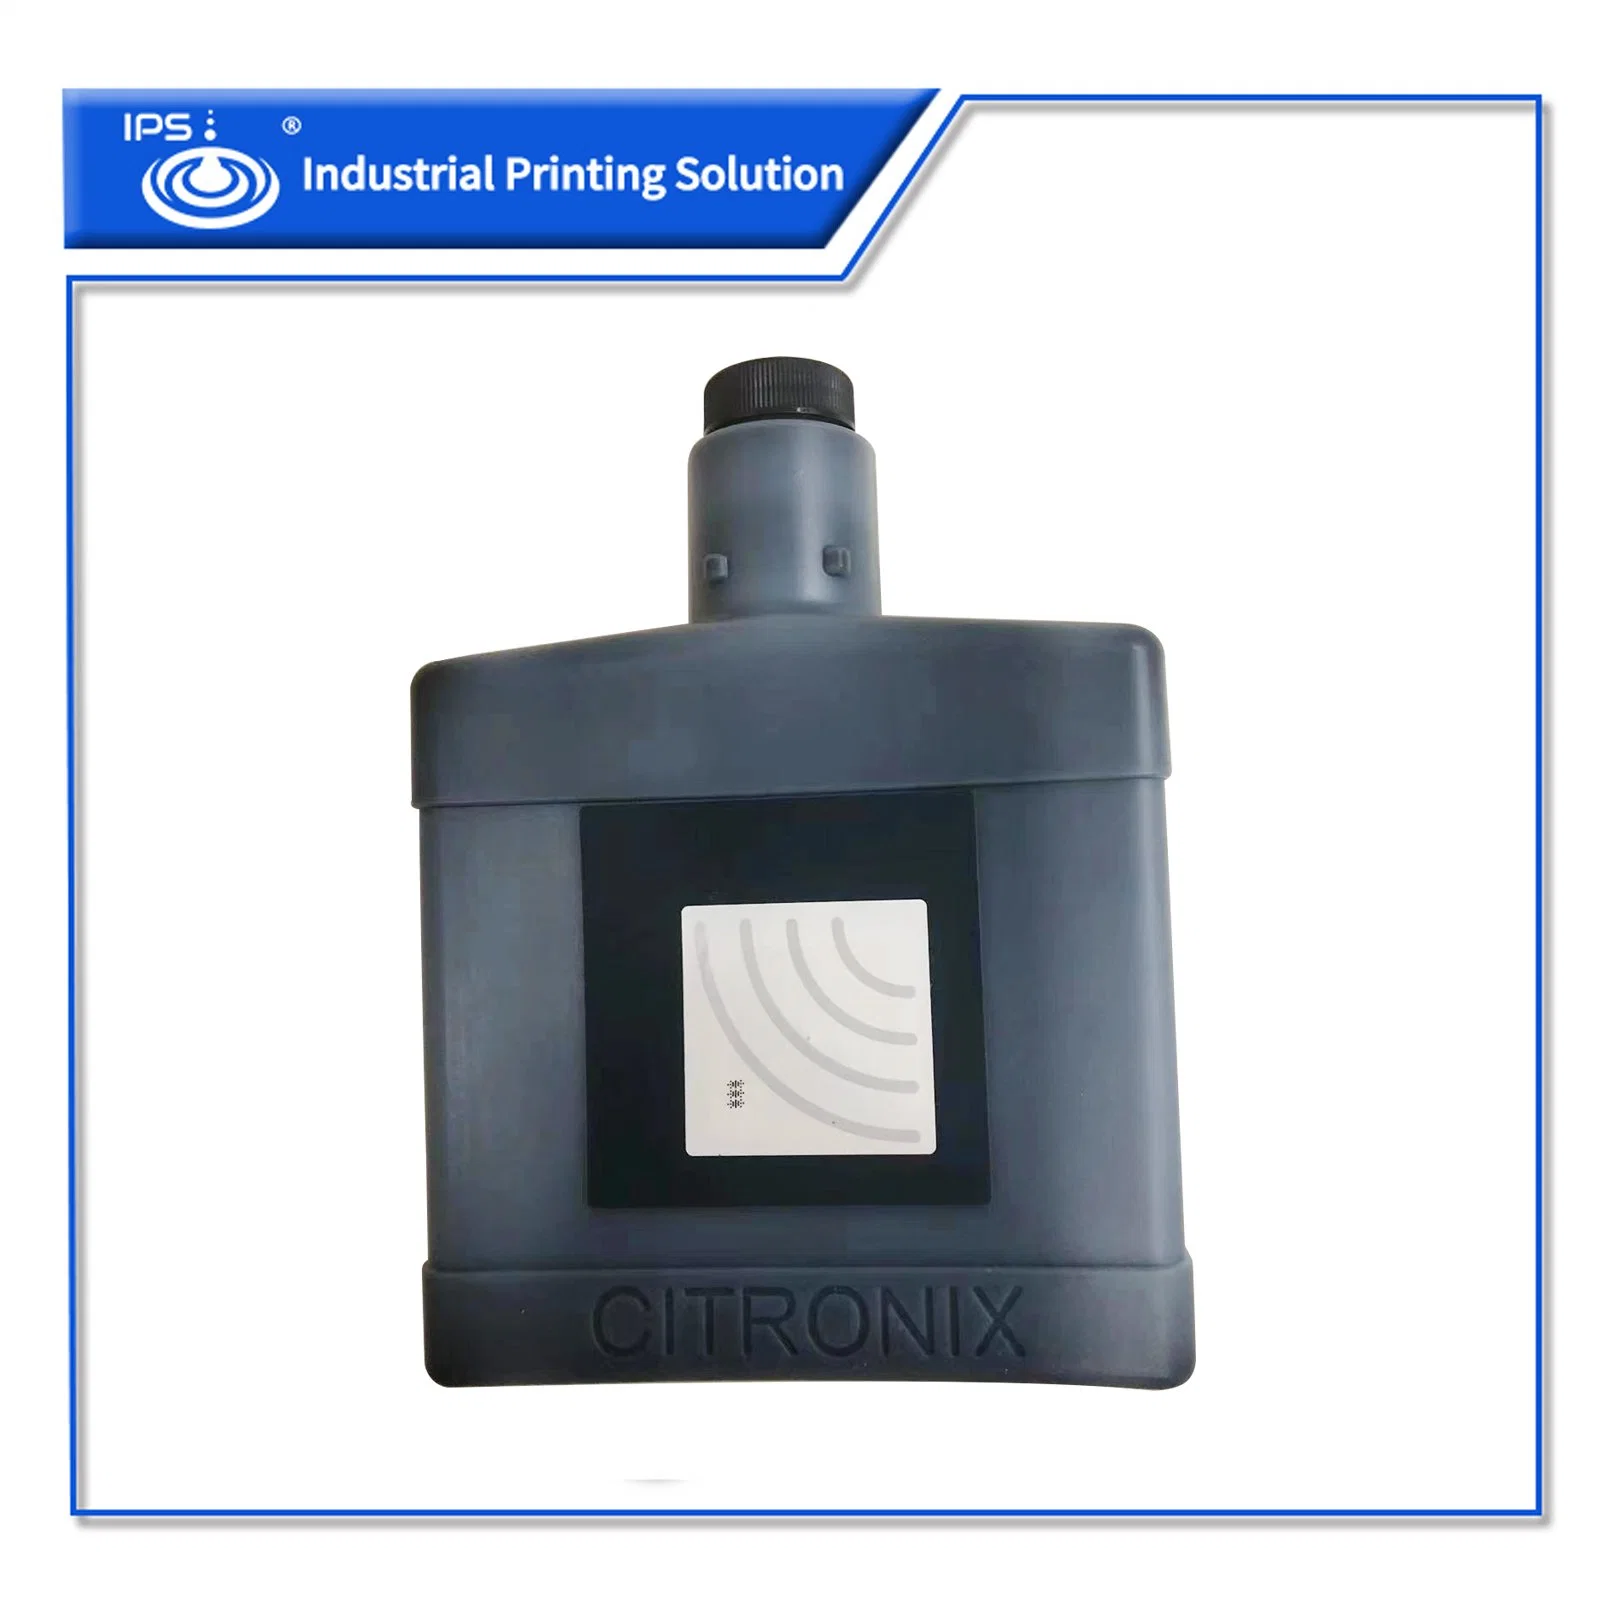 302-1001-002 Citronix Original Black with RFID Chip Tag for Cij Printer Ink